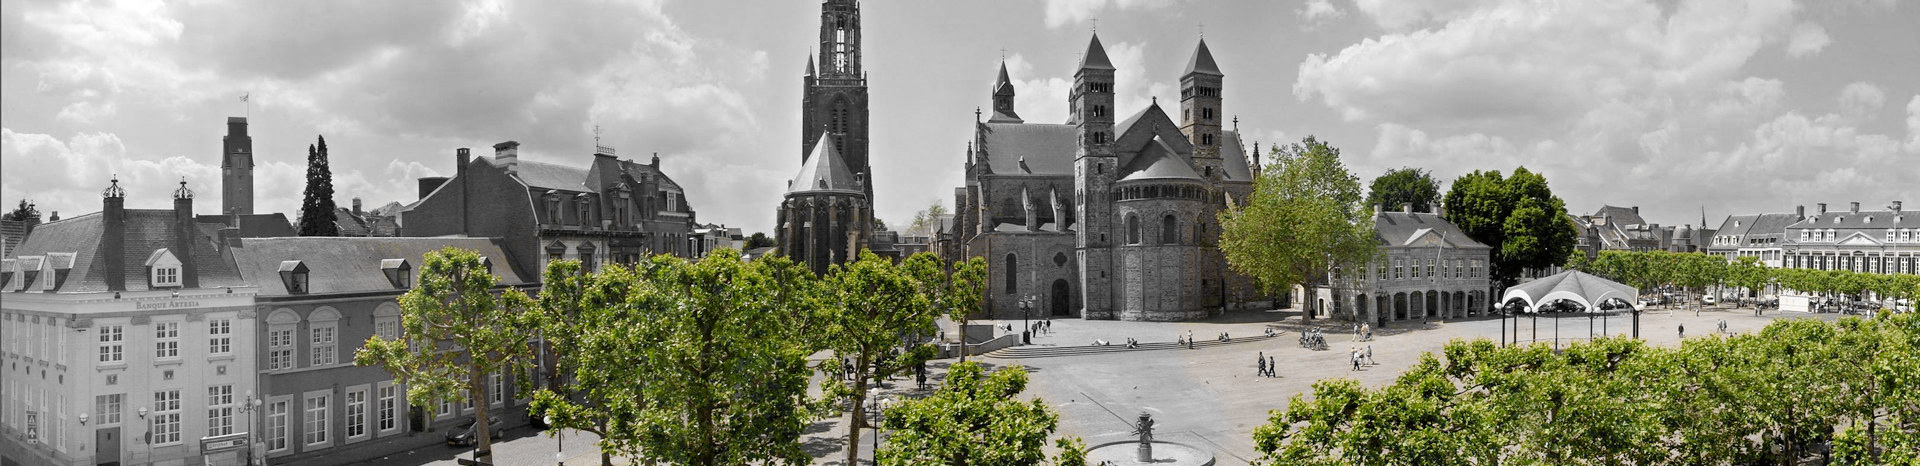 Letselschade advocaat Maastricht | LetselPro